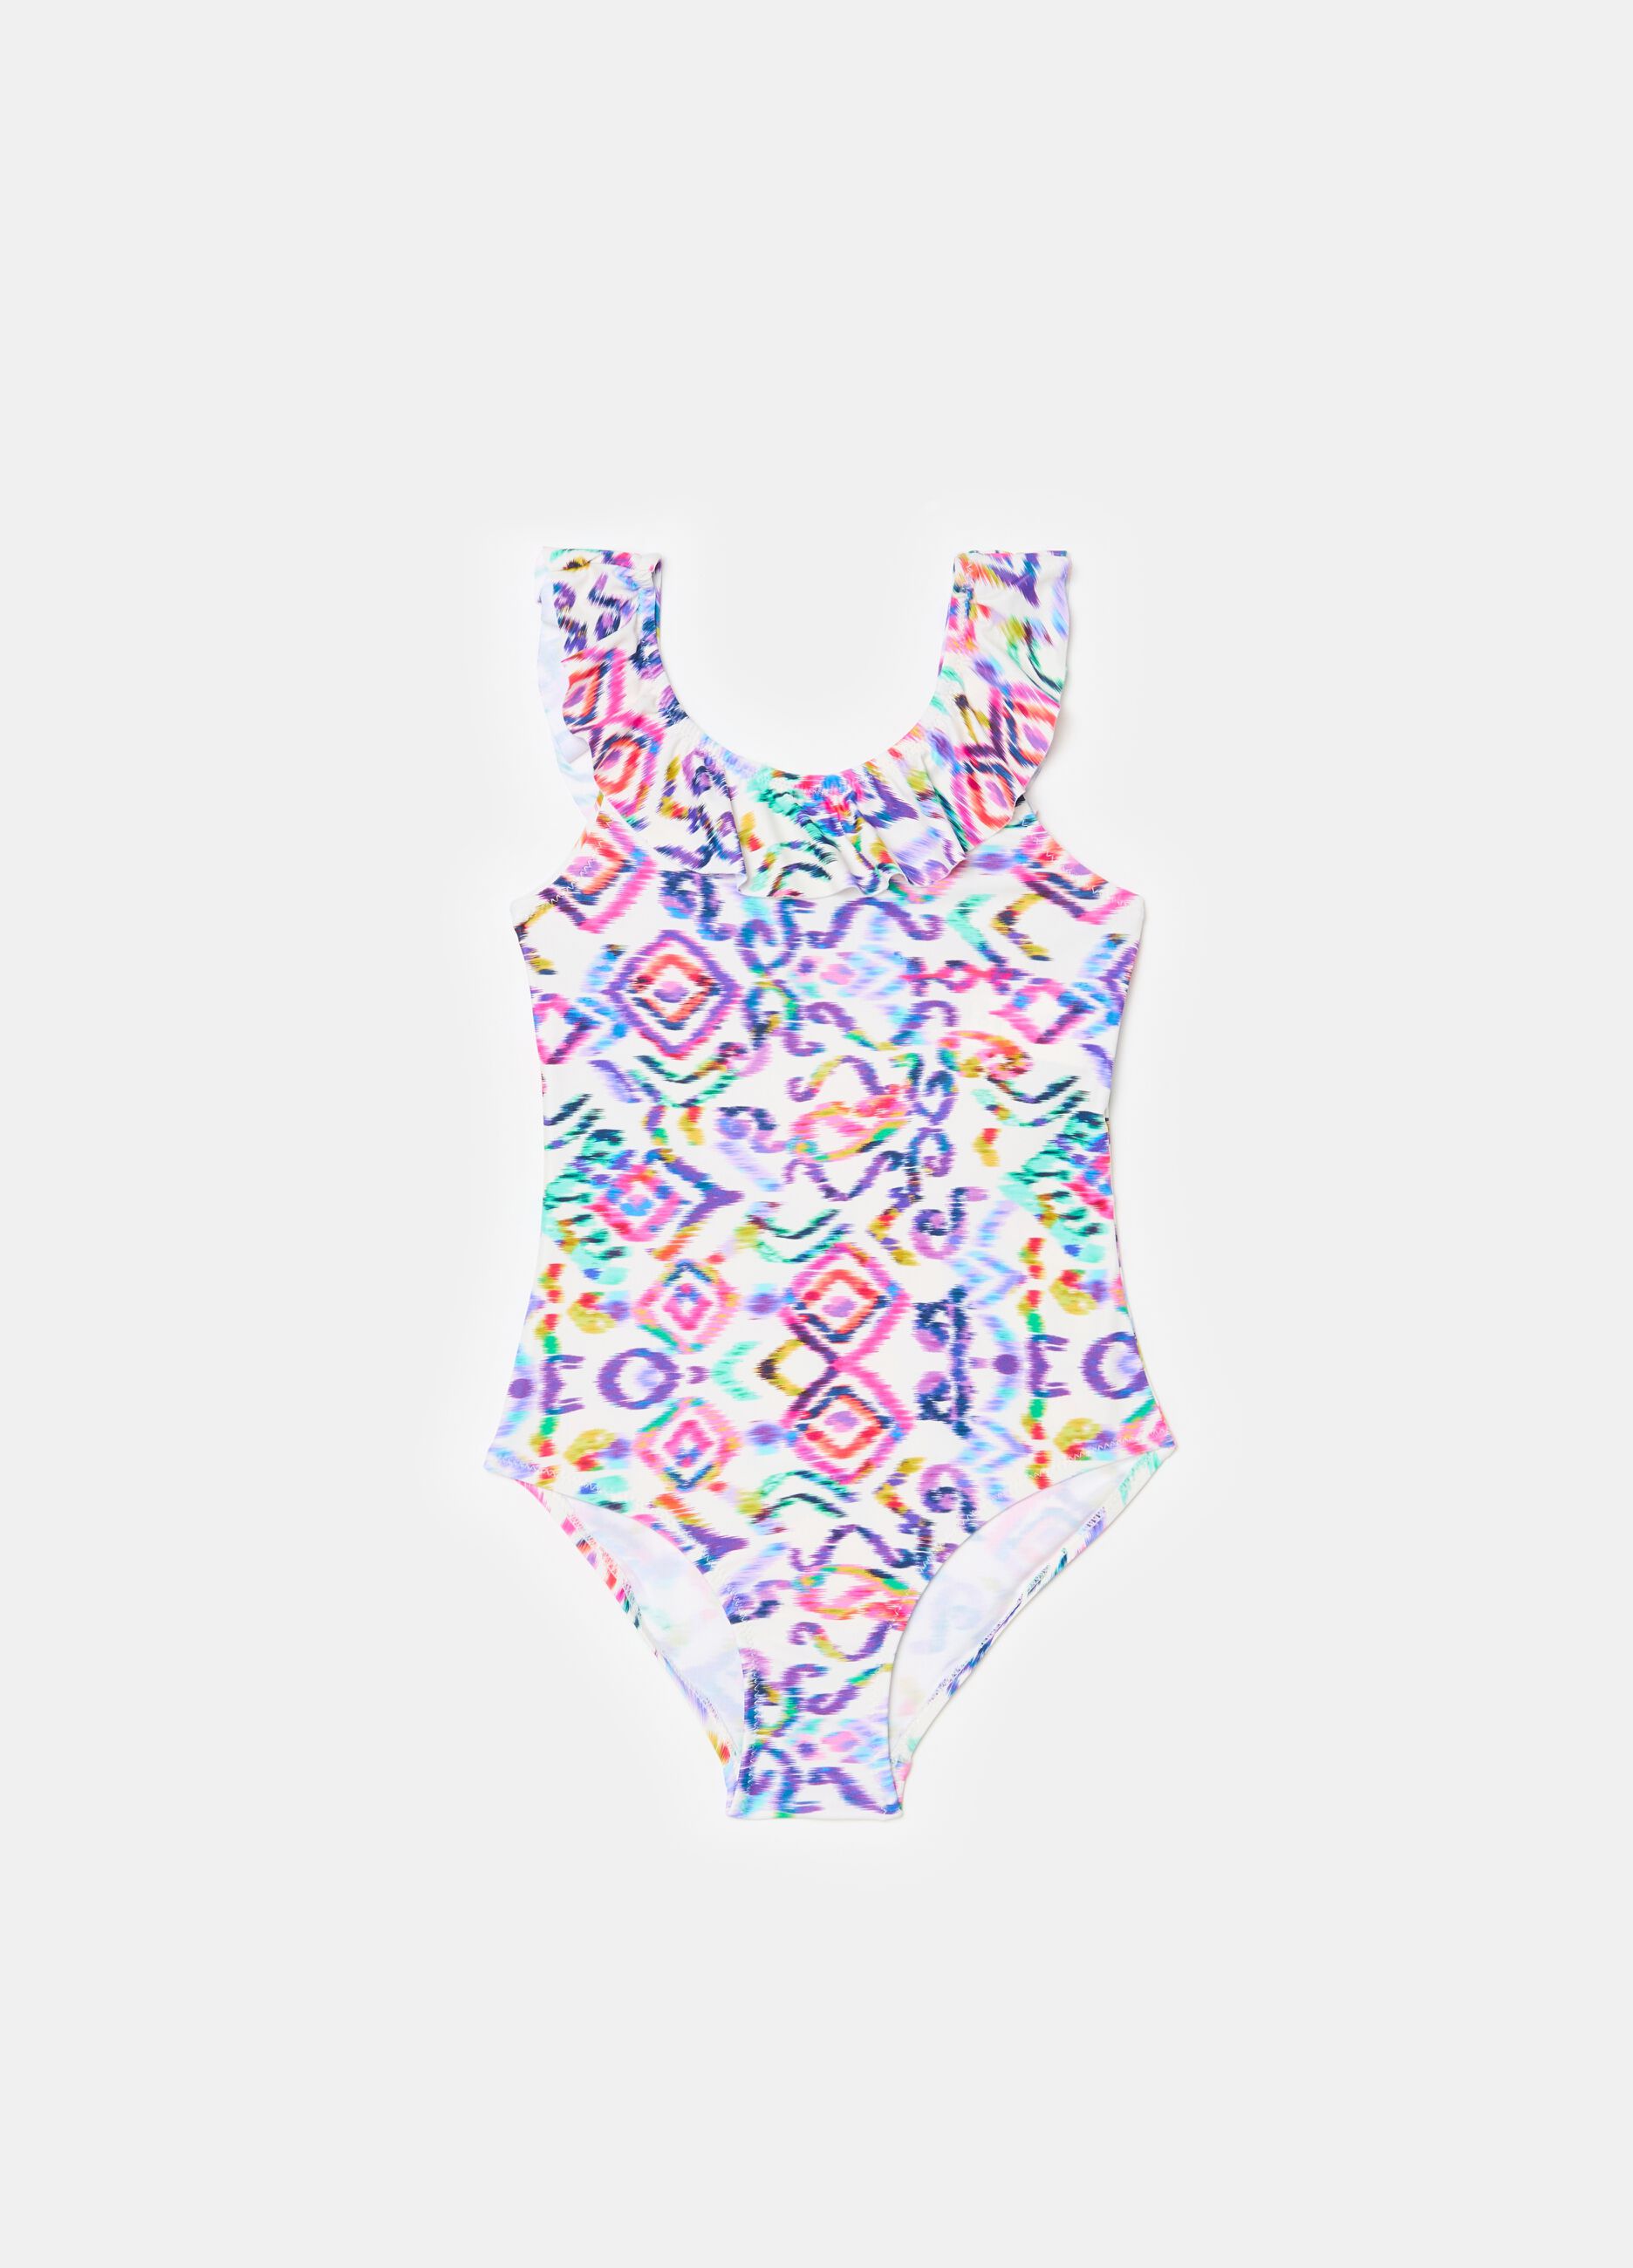 One-piece swimsuit with tie-dye pattern